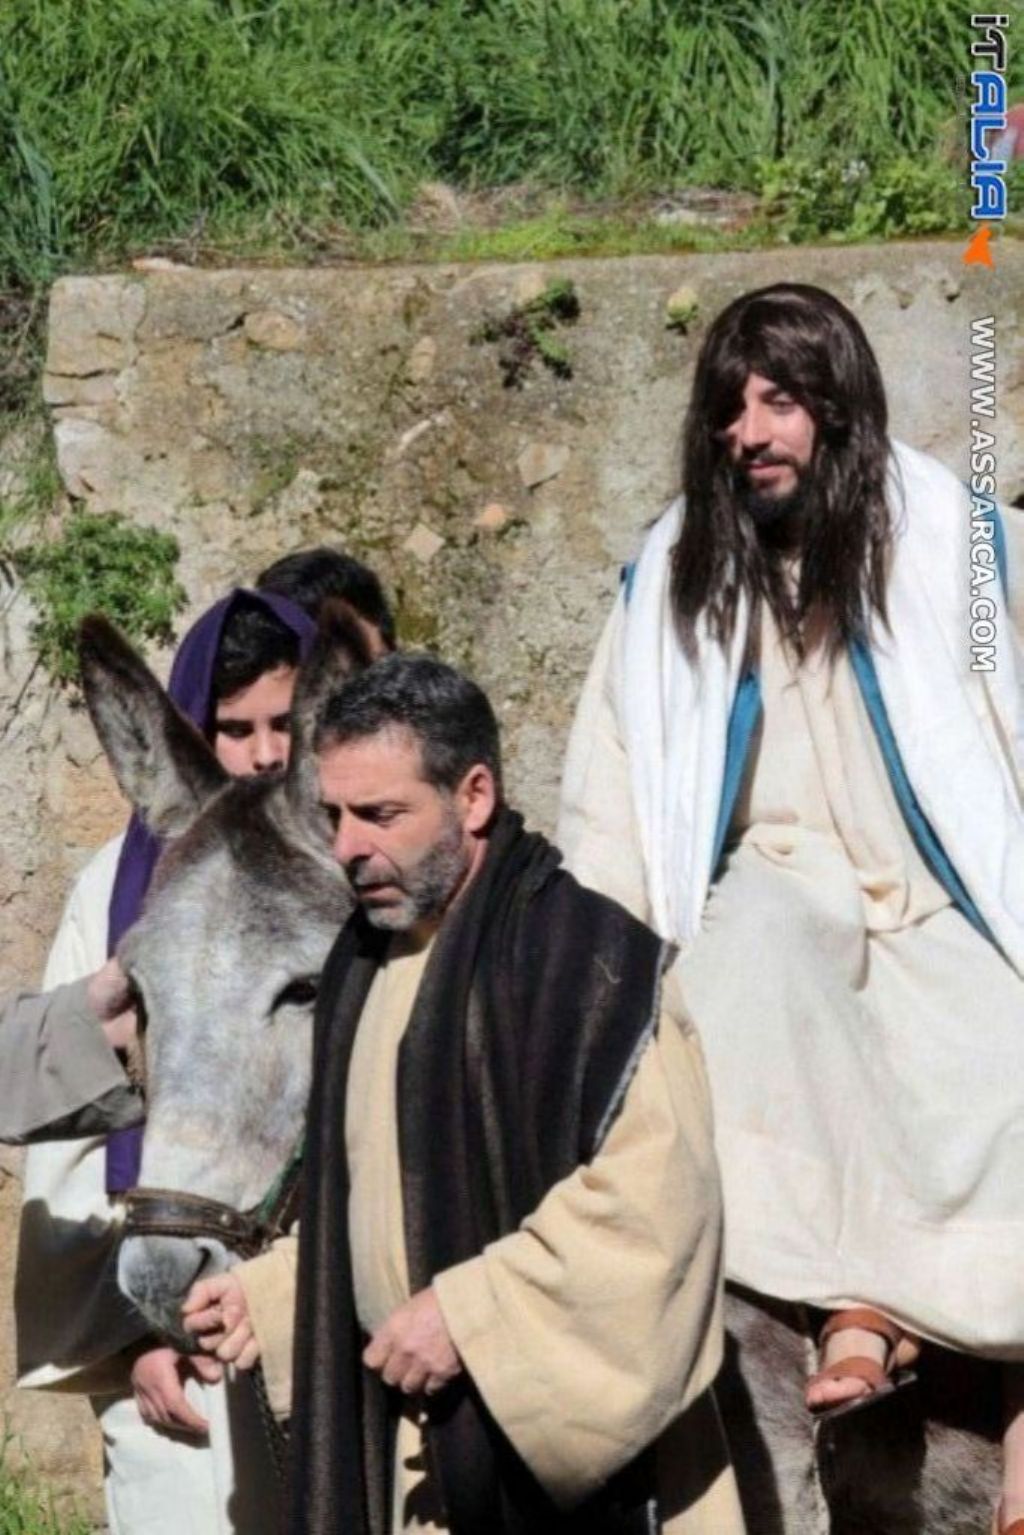 Immagini del film di Gesù,girate a Marcatobianco